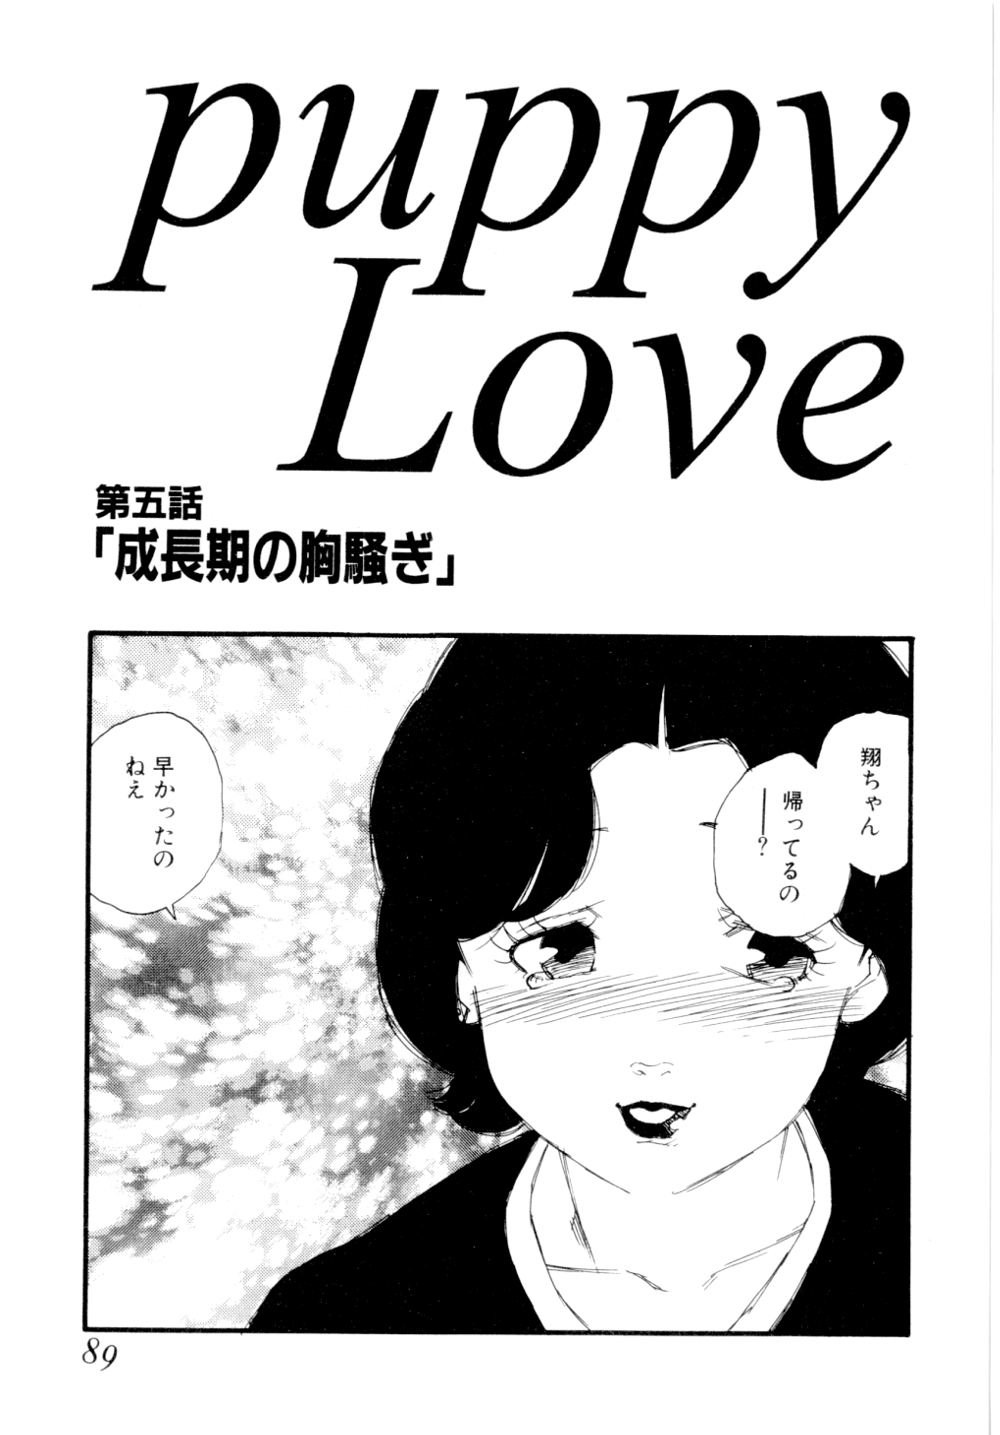 [海明寺裕] puppy Love